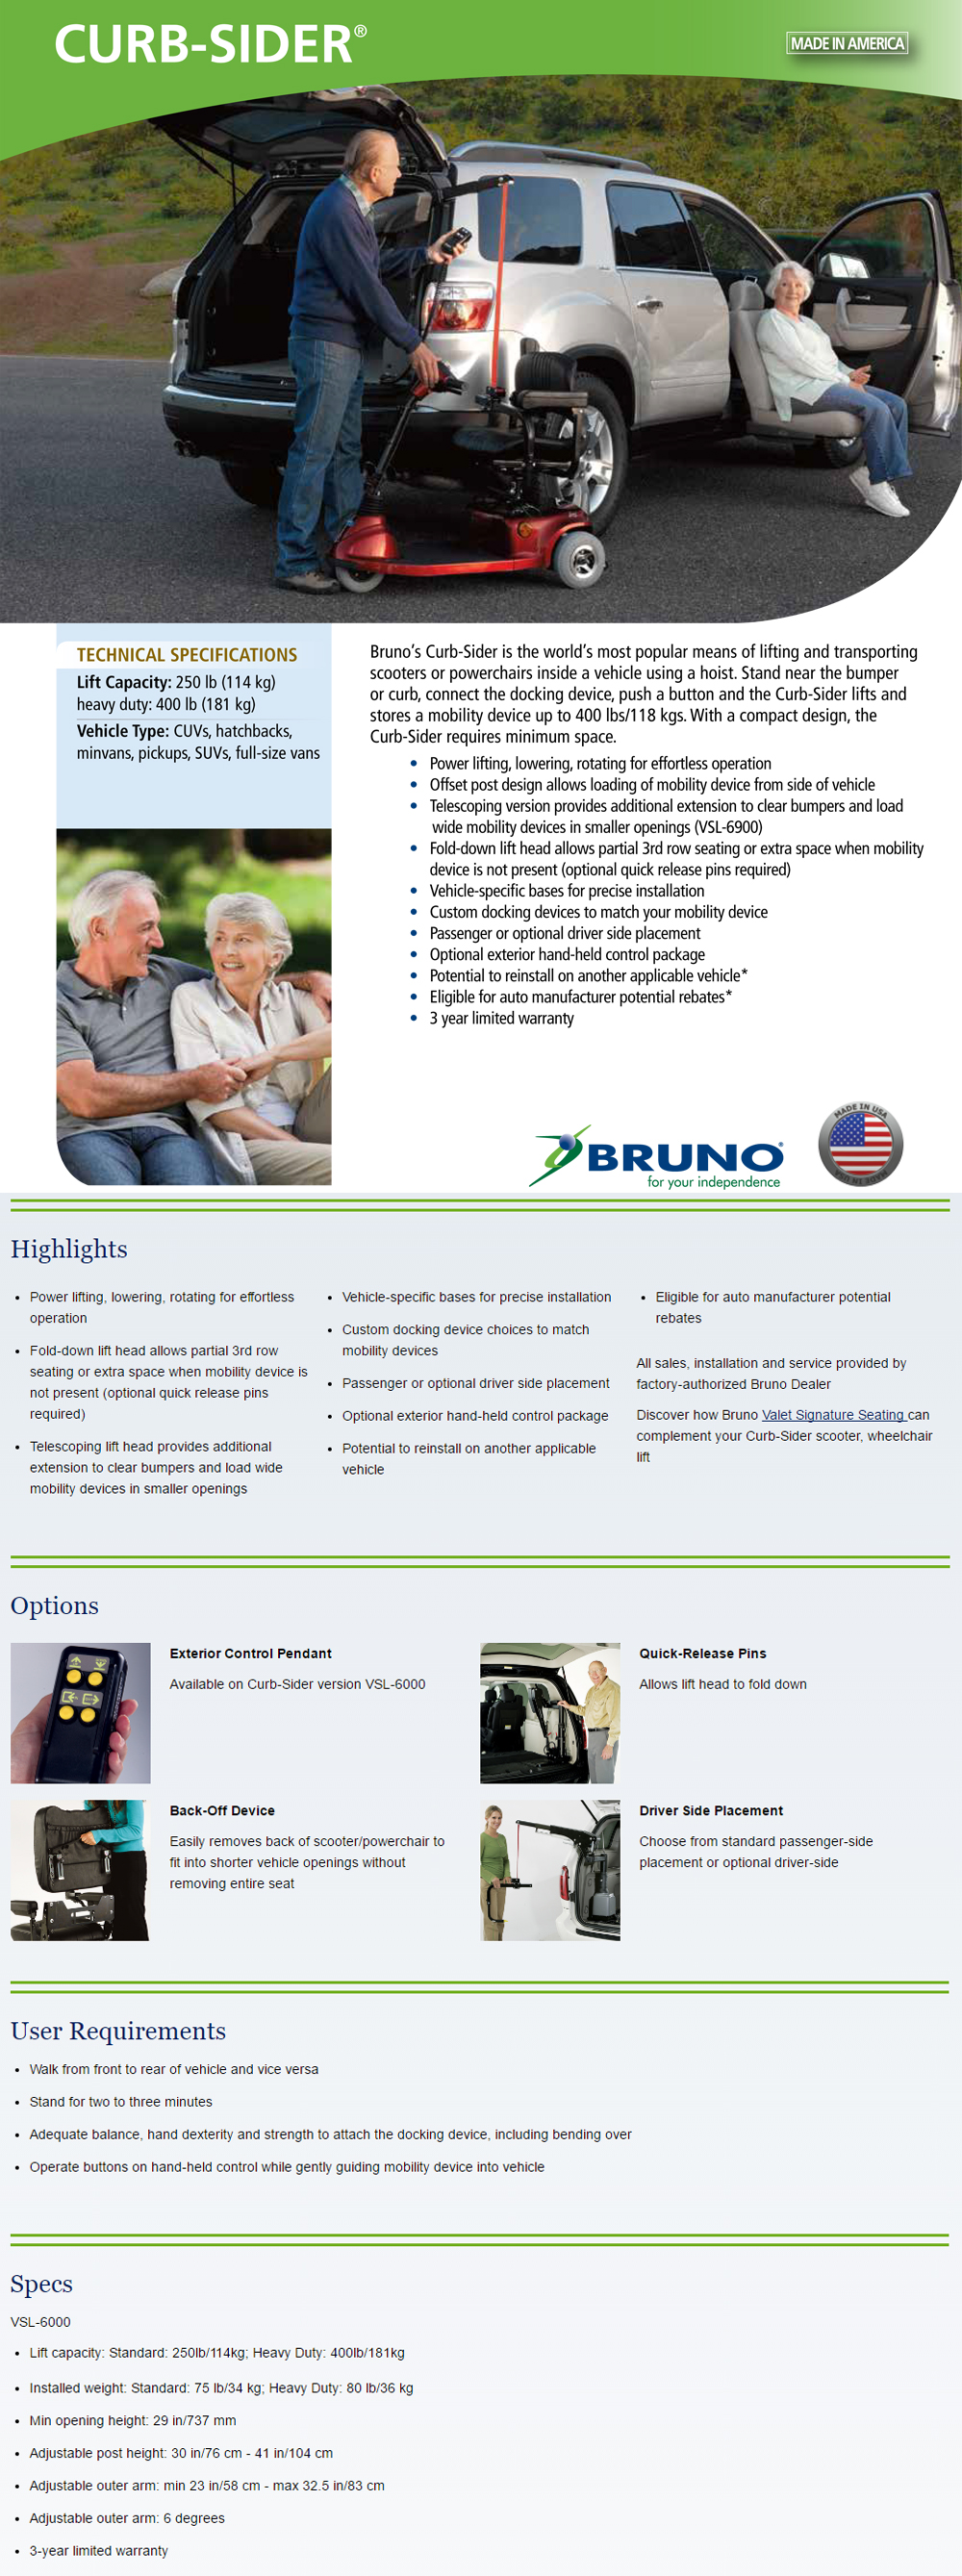 Bruno VSL-6000-Curbsider-electric-lift